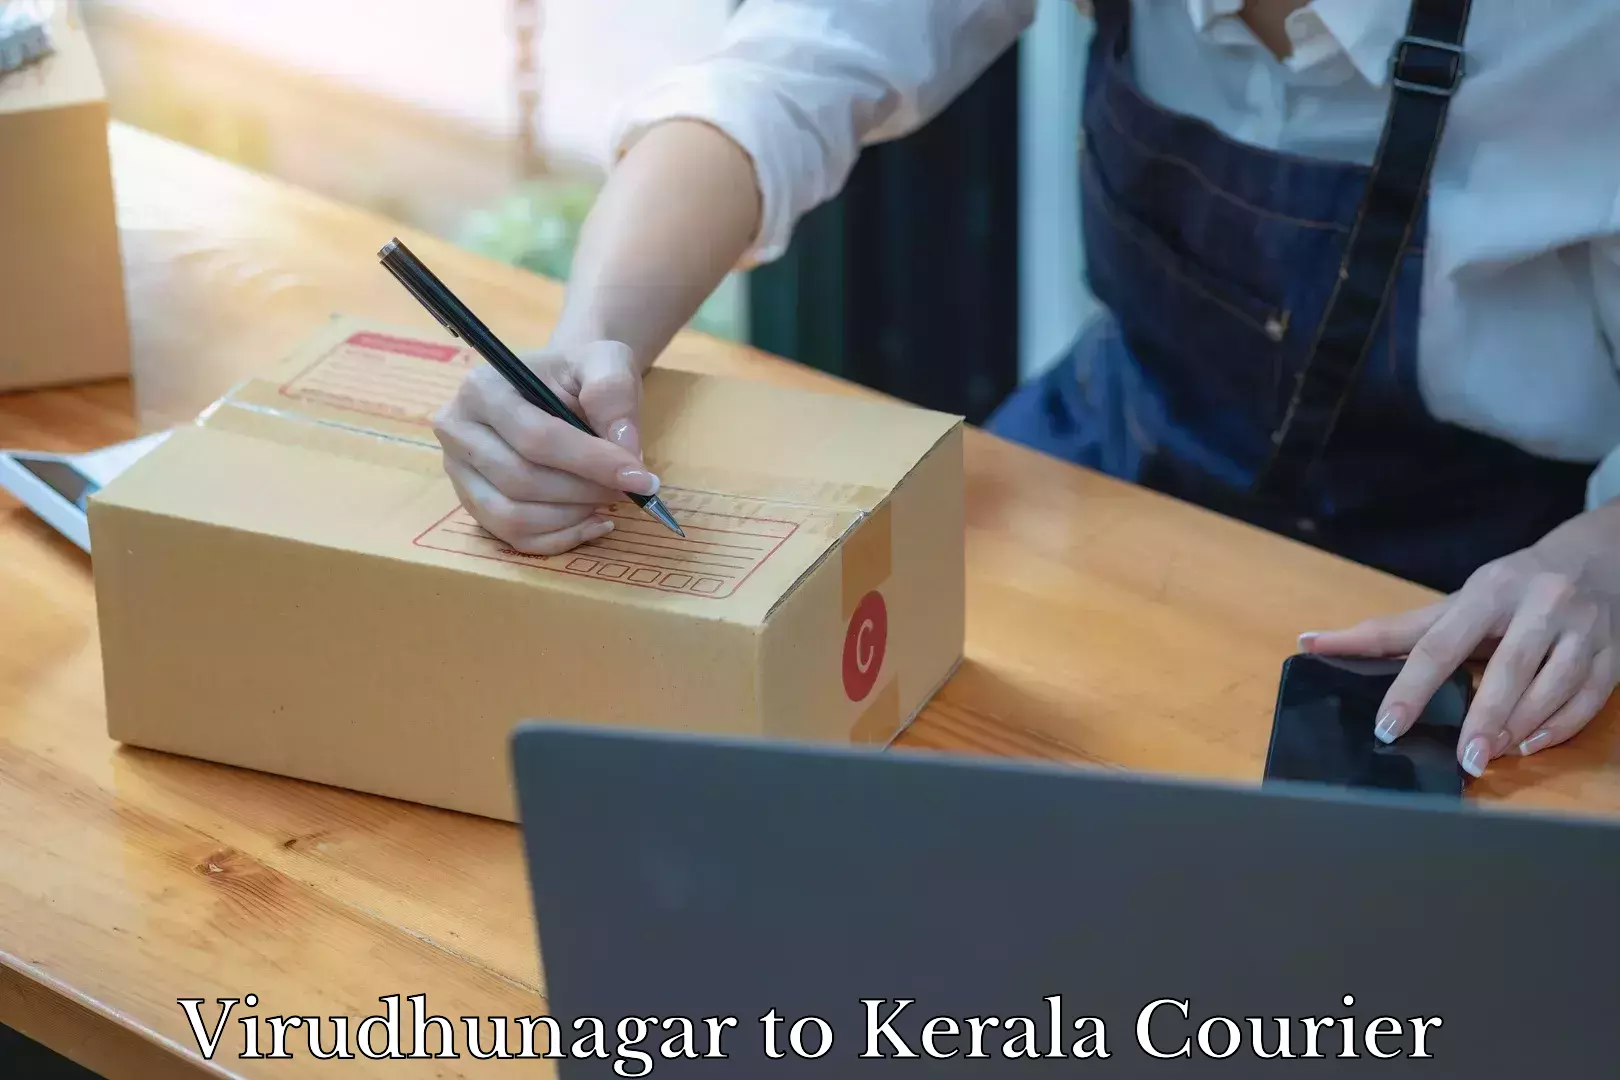 Furniture delivery service Virudhunagar to Kerala